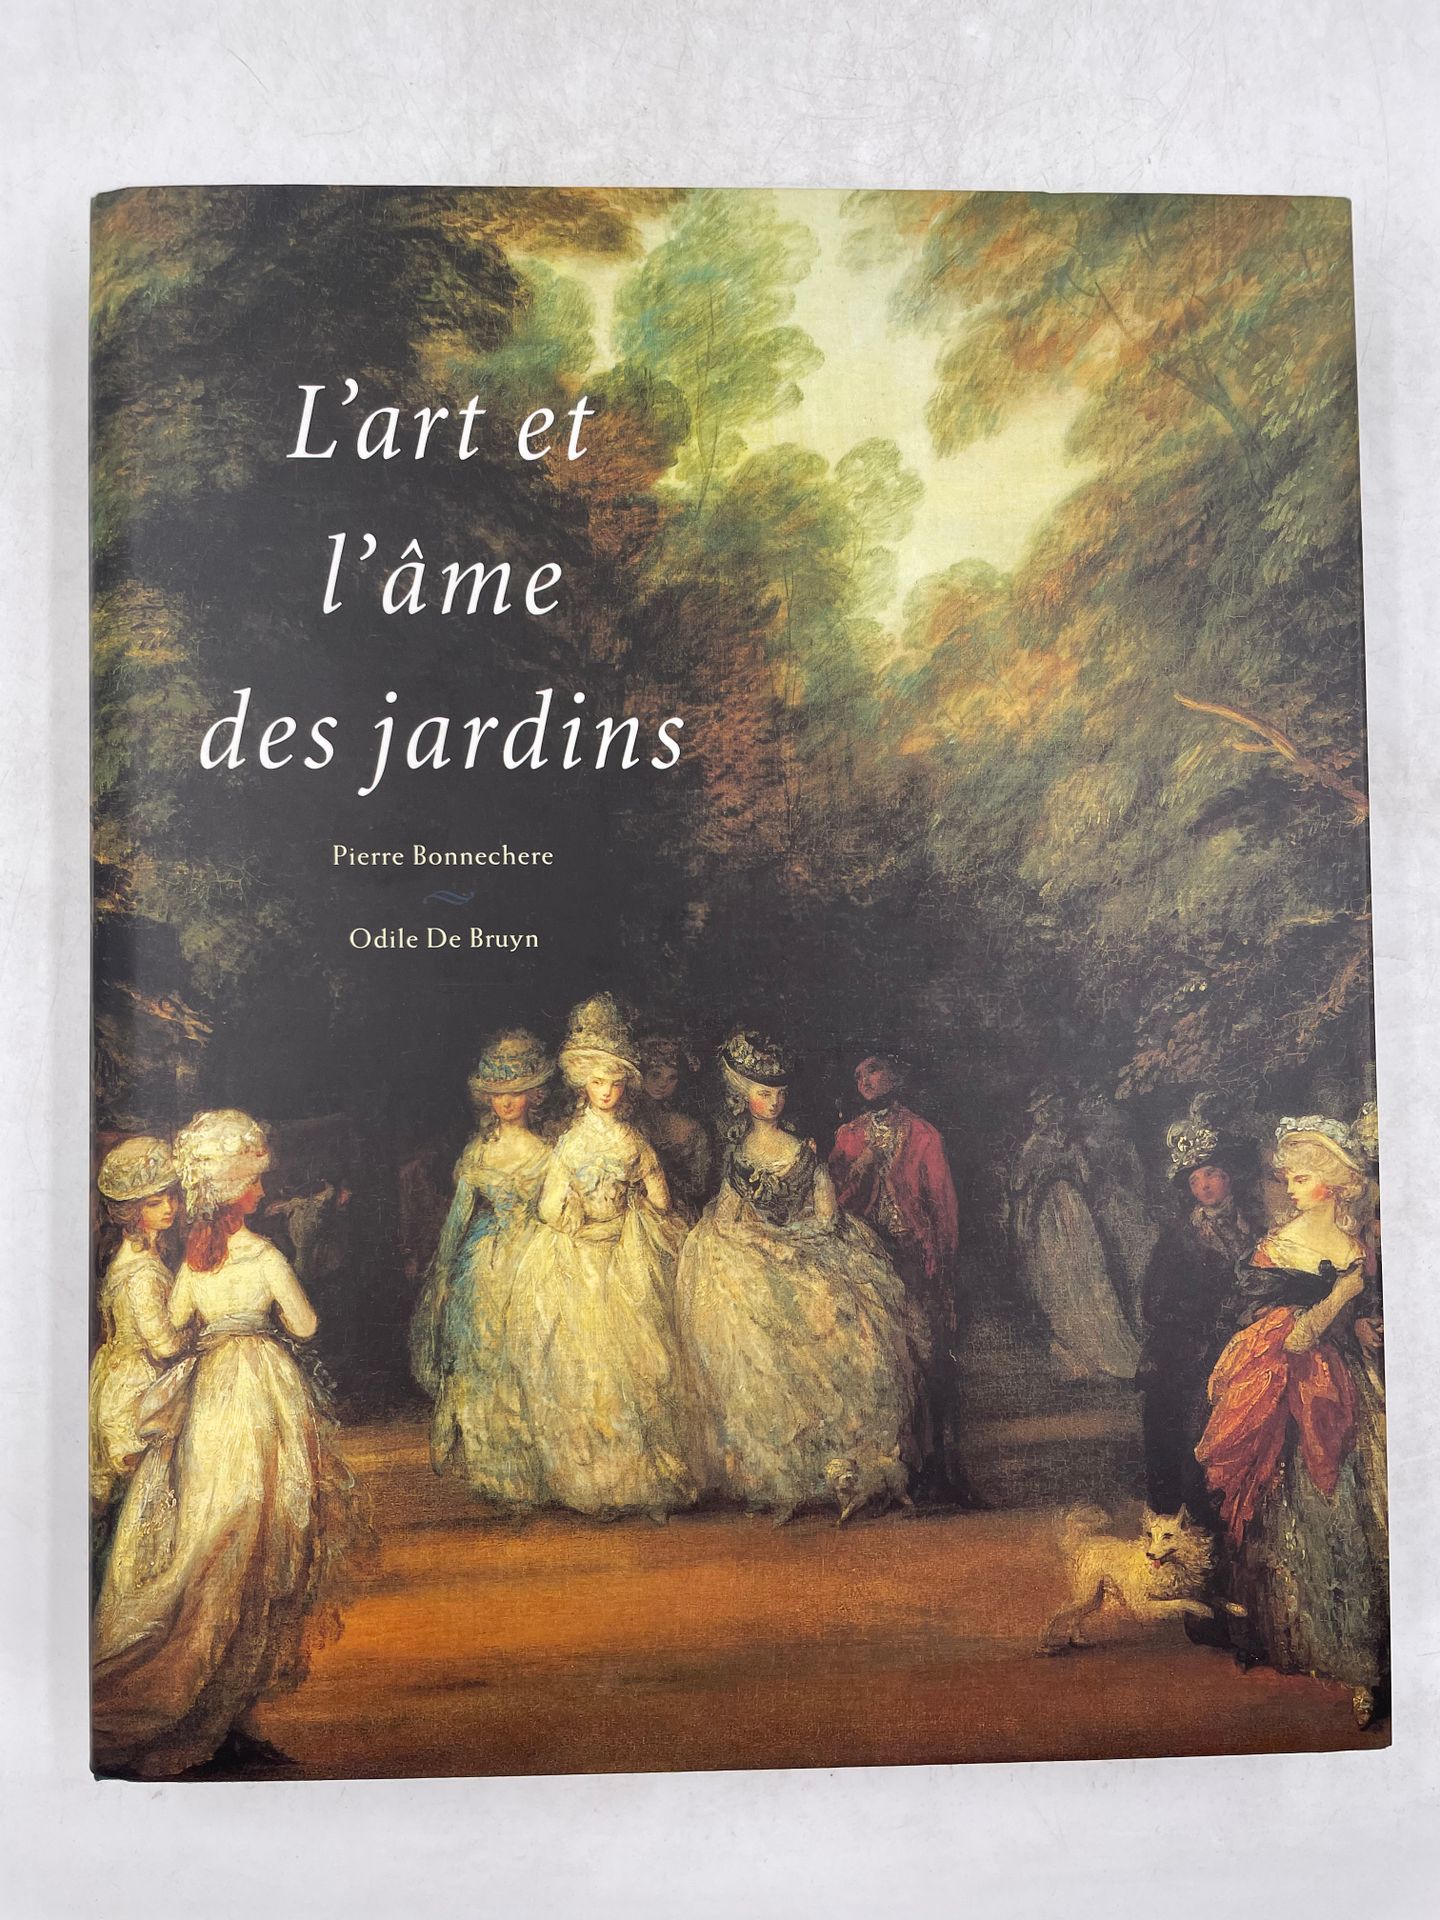 Null "L'art et l'ame des jardins", Pierre Bonnechere, Odile de Bruyn, Ed. Biblio&hellip;